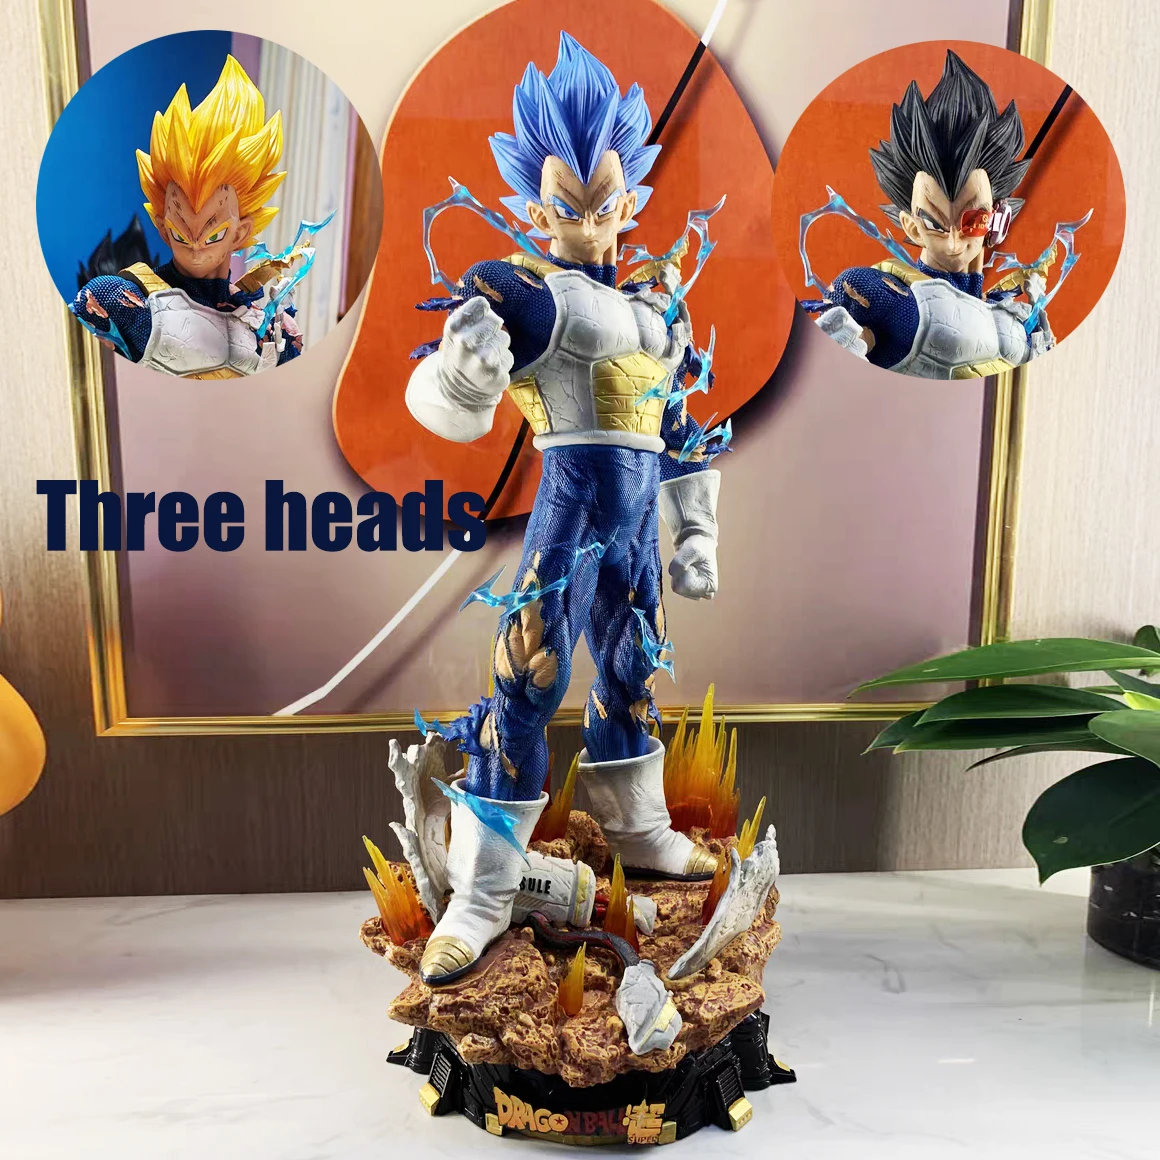 

New 55cm Original Bandai Dragon Ball Z Gk Vegeta Super Saiyan Three Headed Action Anime Figure Pvc Collection Statue Figurine To